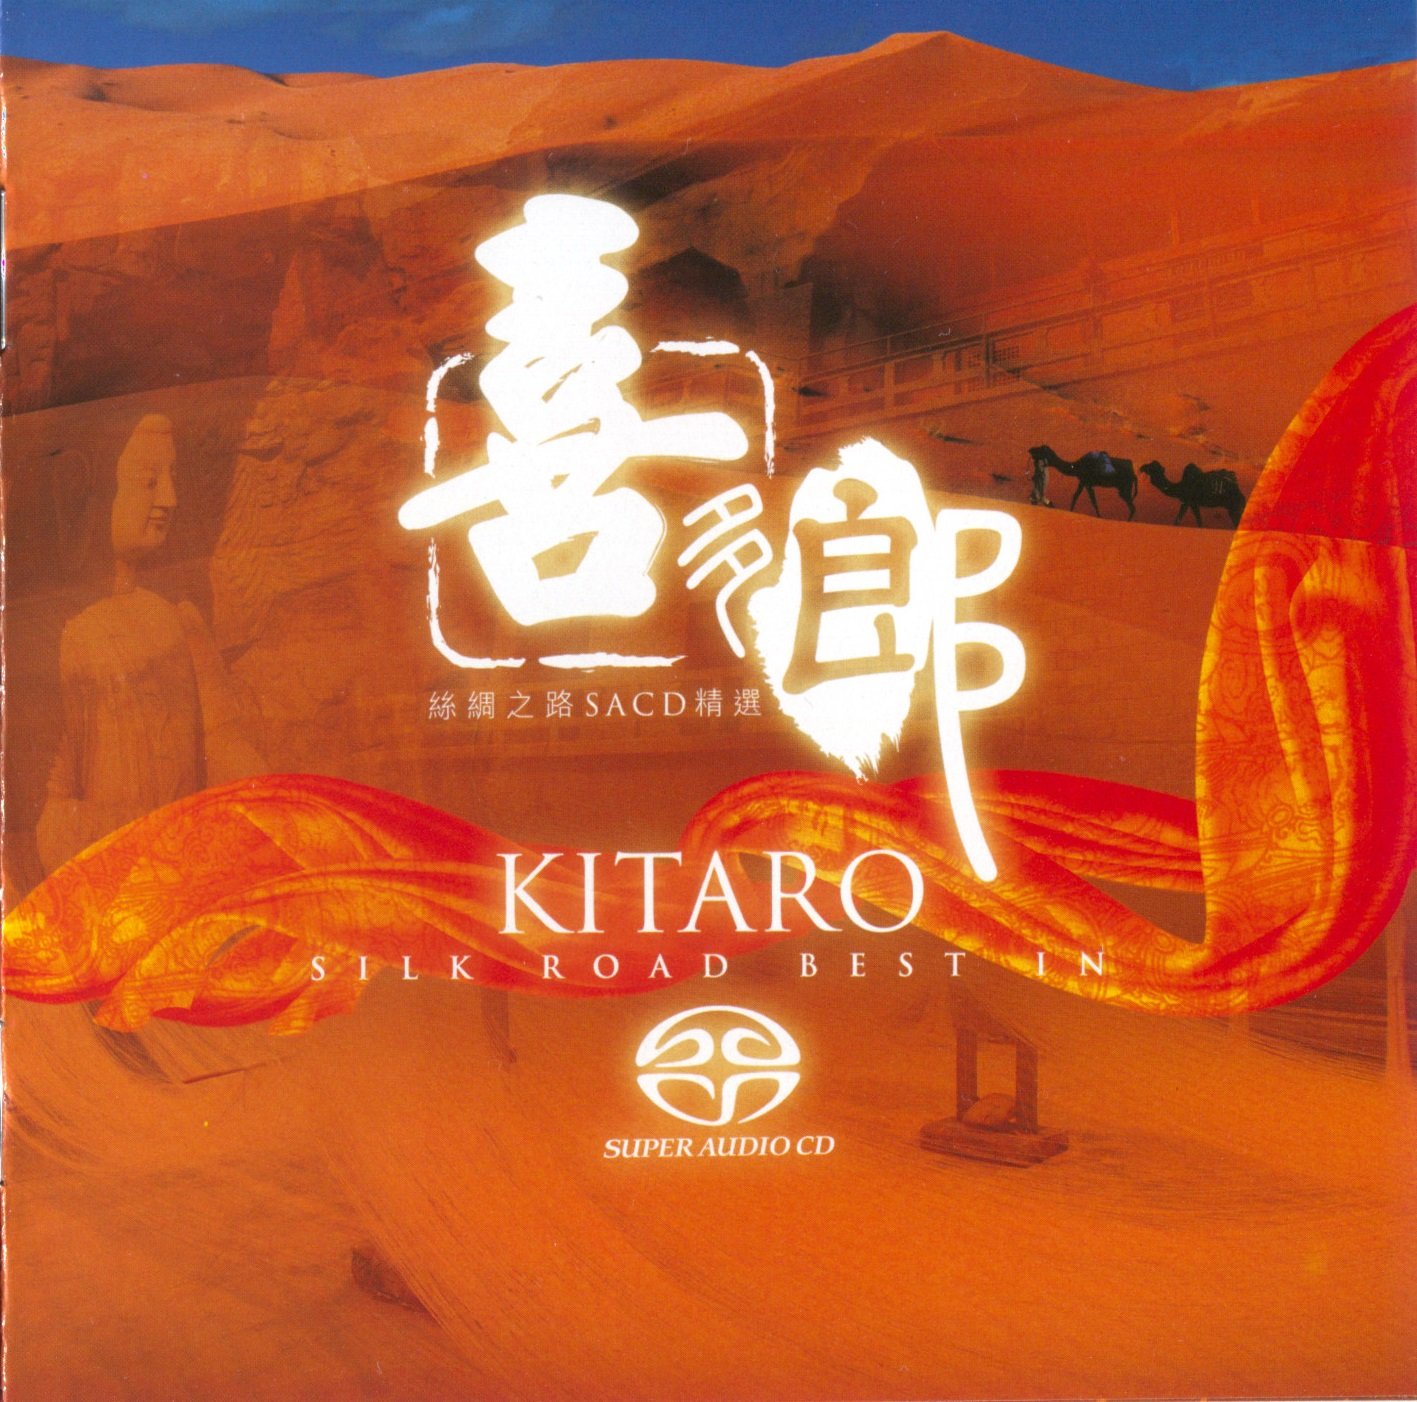 Kitaro Silk Road Best In Sacd Artwork 1 Of 1 Last Fm